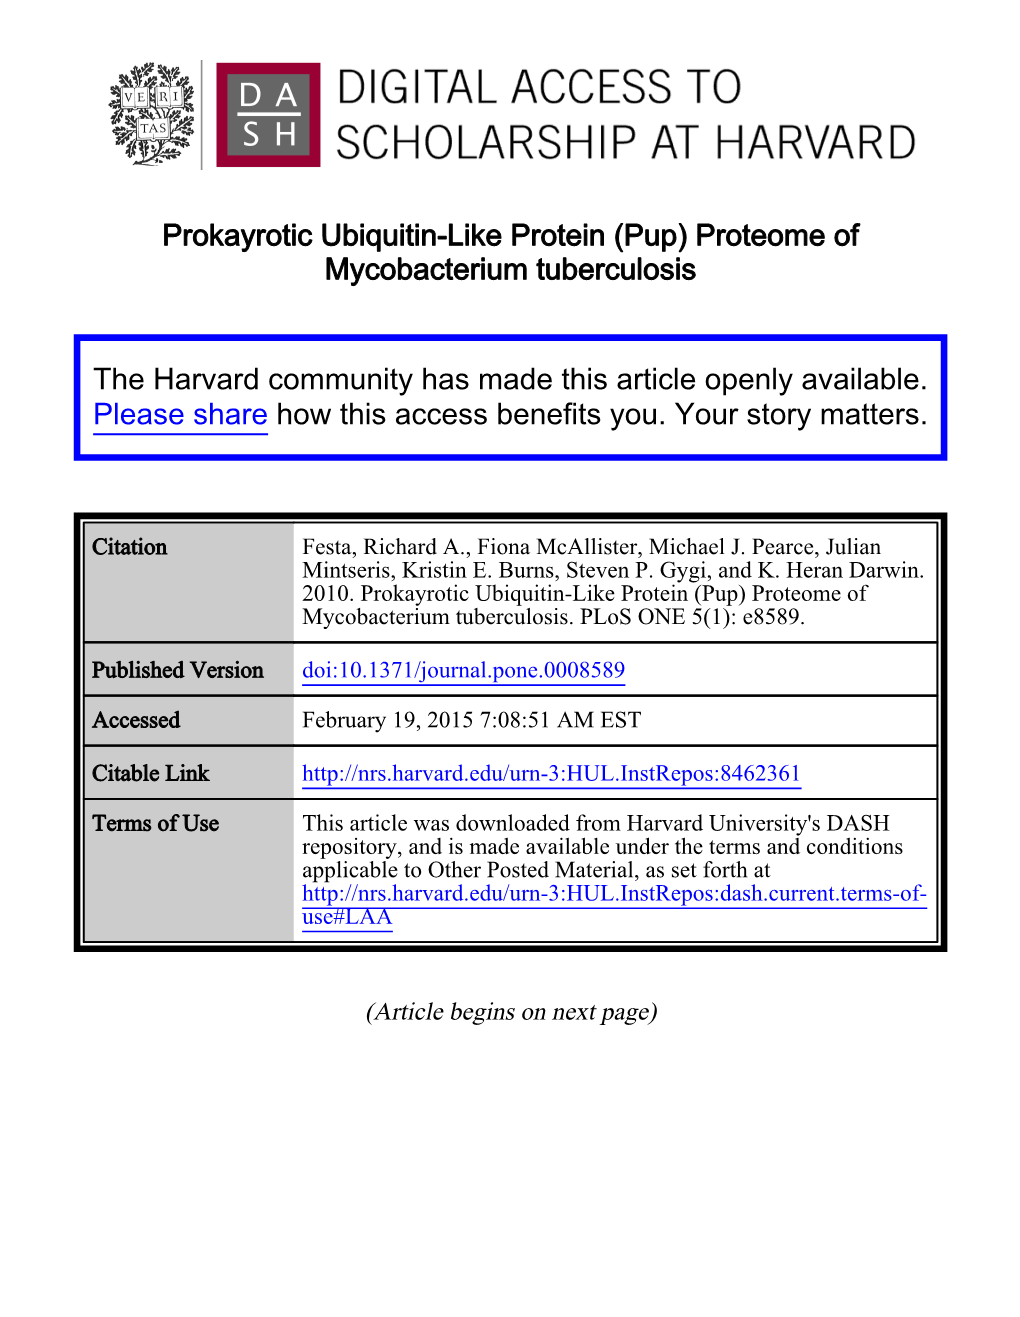 Prokayrotic Ubiquitin-Like Protein (Pup) Proteome of Mycobacterium Tuberculosis